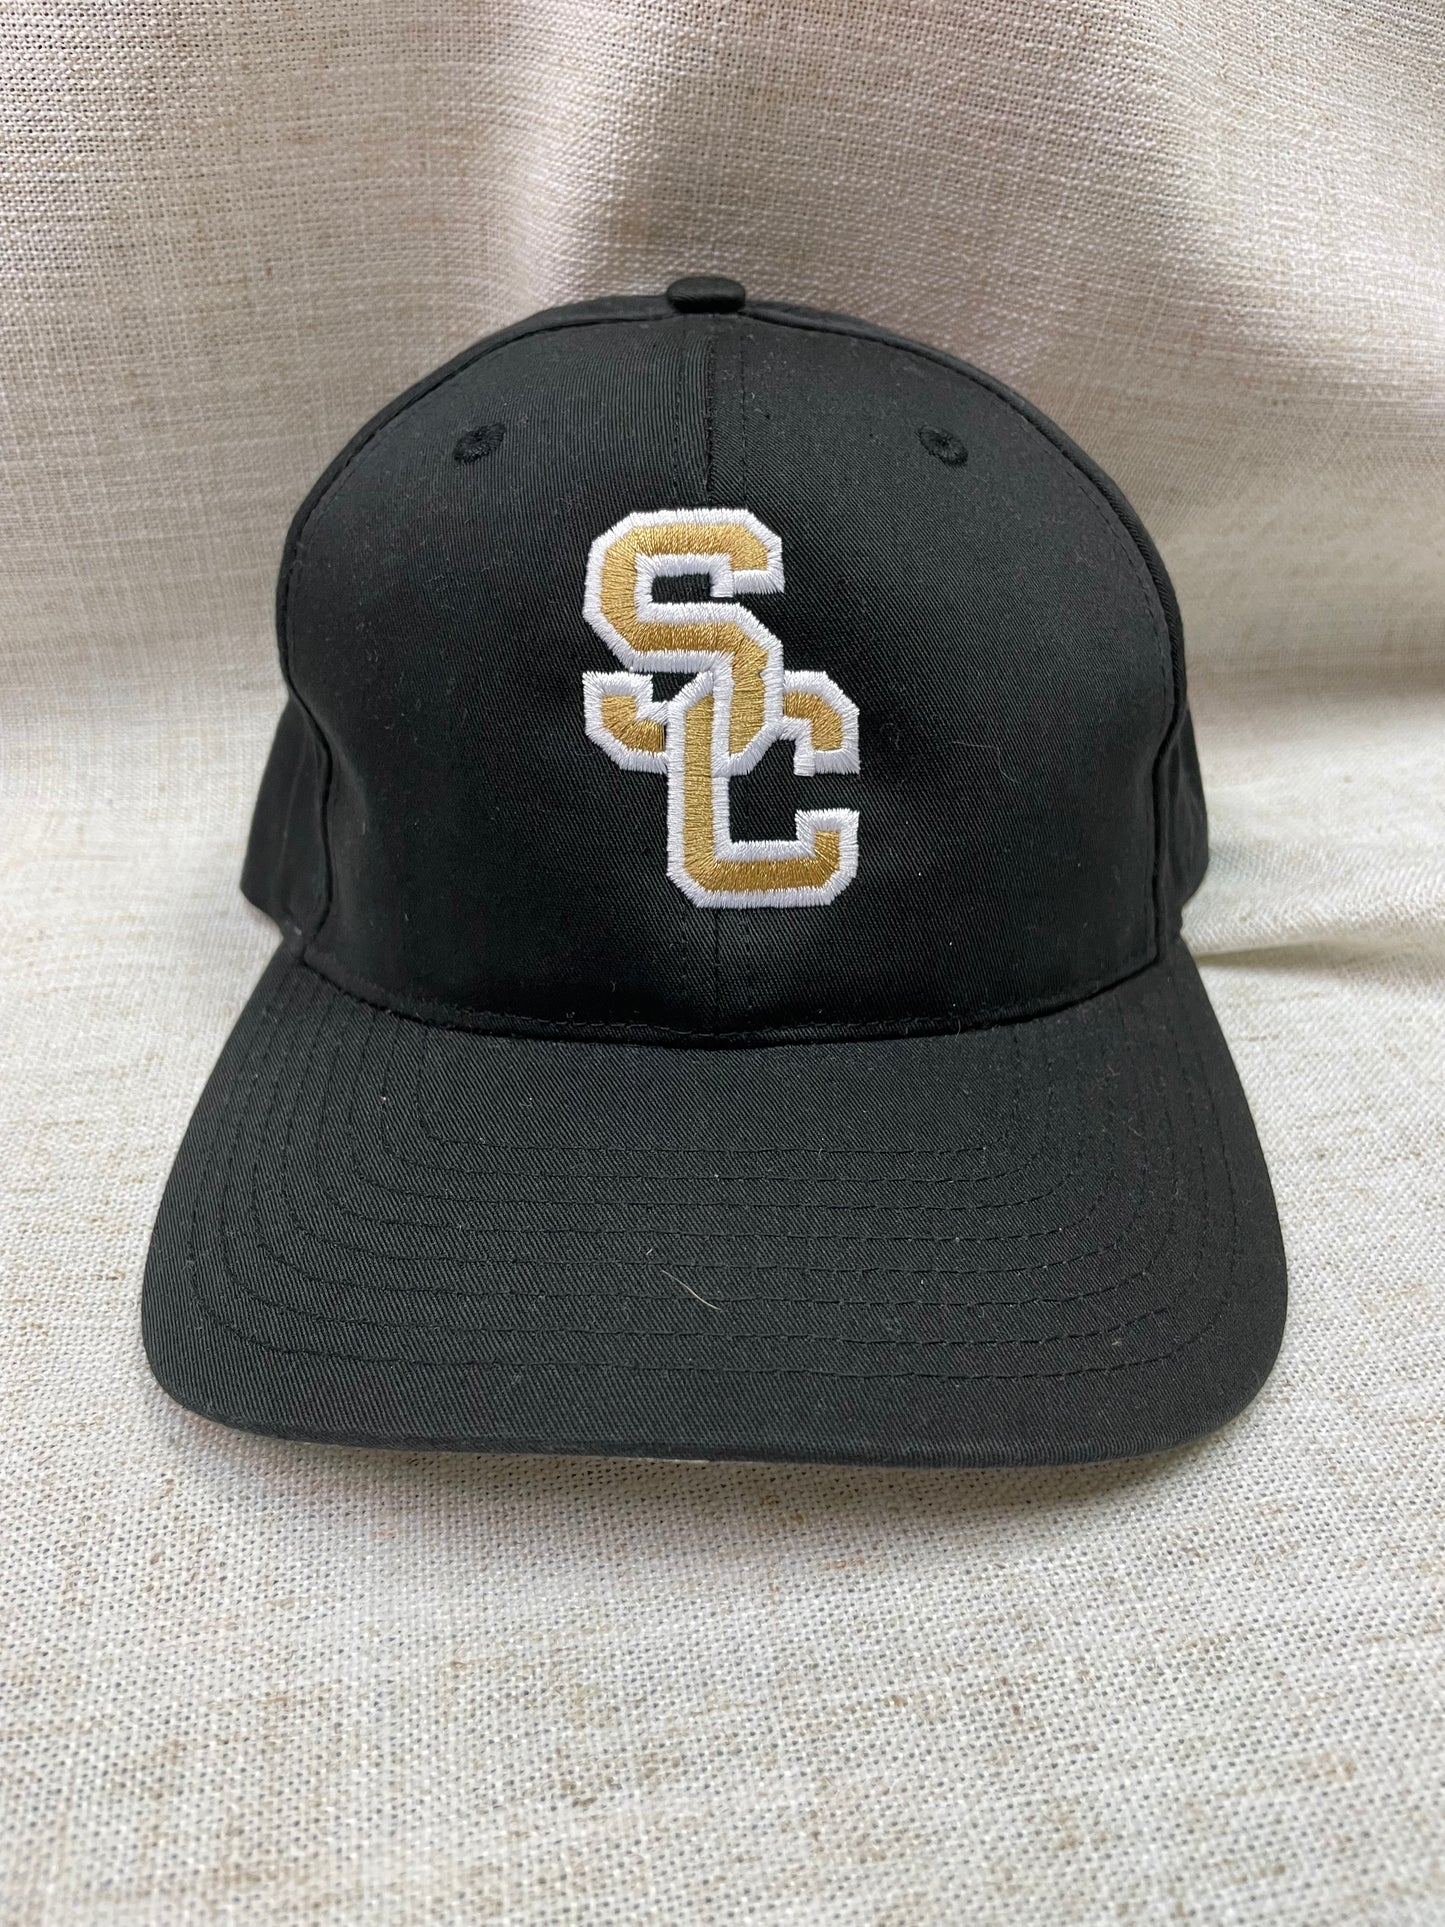 Stewart county hats